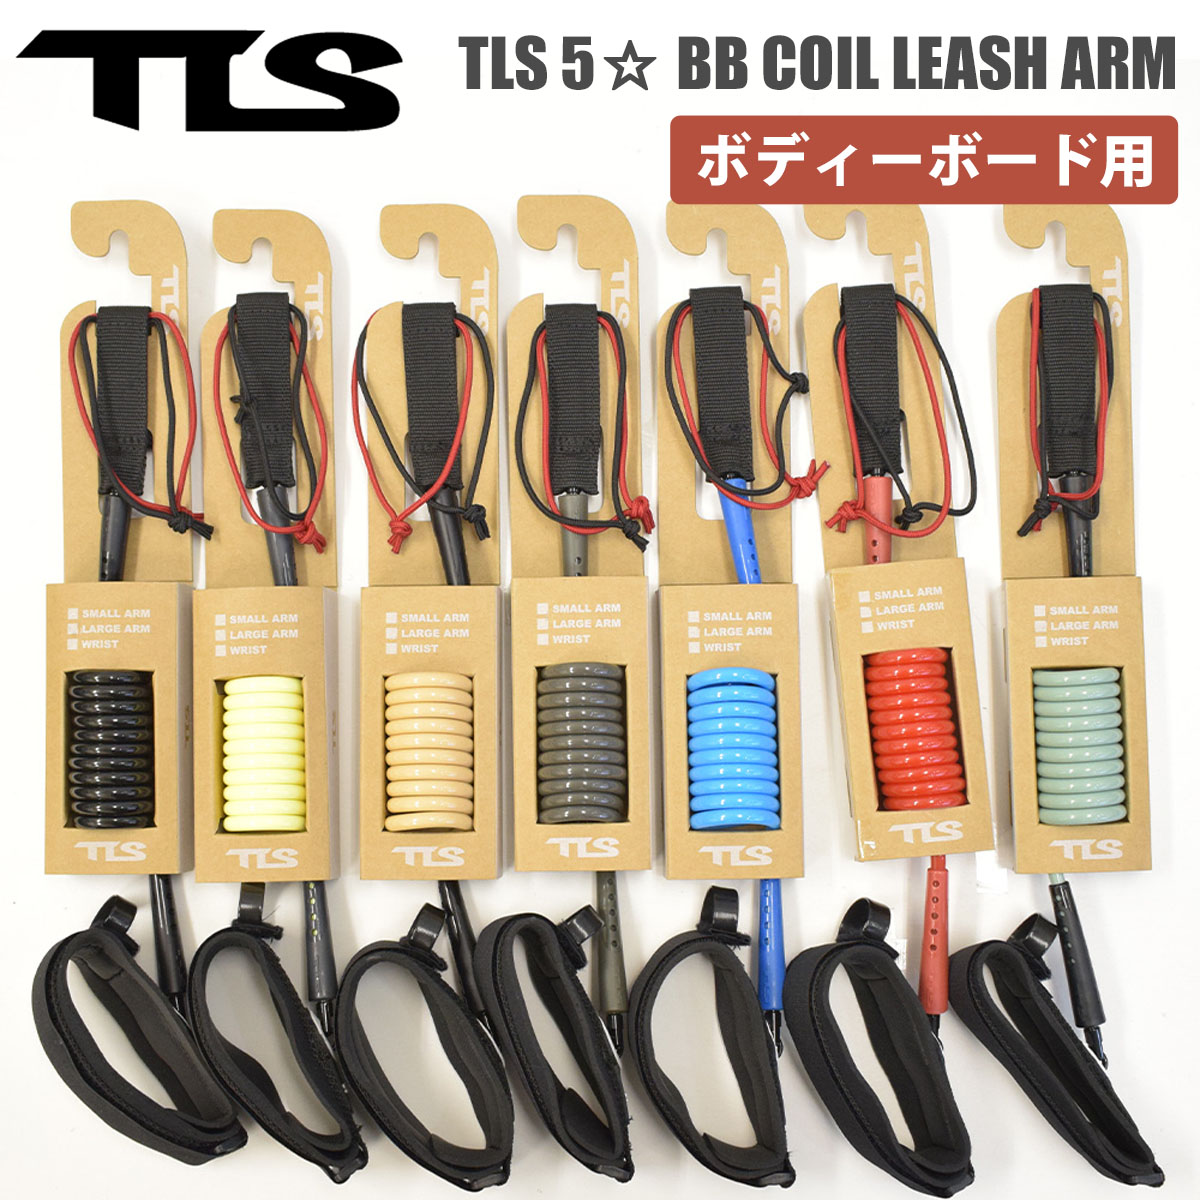 23 TLS TOOLS トゥールス ツールス BBリーシュ TLS 5☆ BB COIL LEASH ARM ボディボード リーシュコード パワー コード コイルコード アーム用 腕 日本正規品 :leash-arm:オーシャン スポーツ 通販 